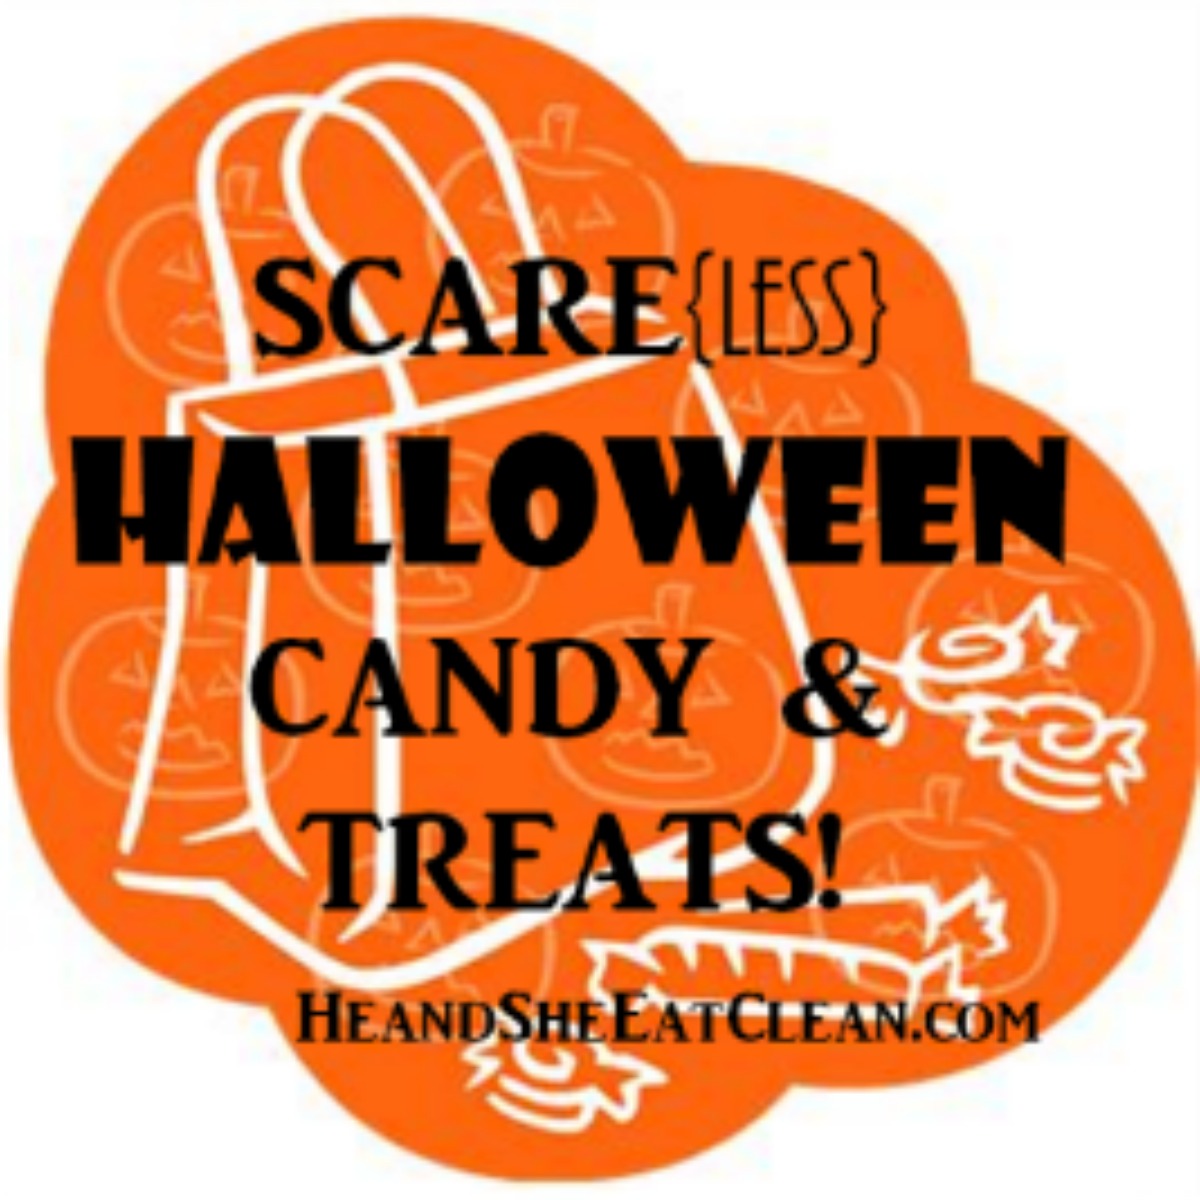 text reads scareless Halloween candy & treats